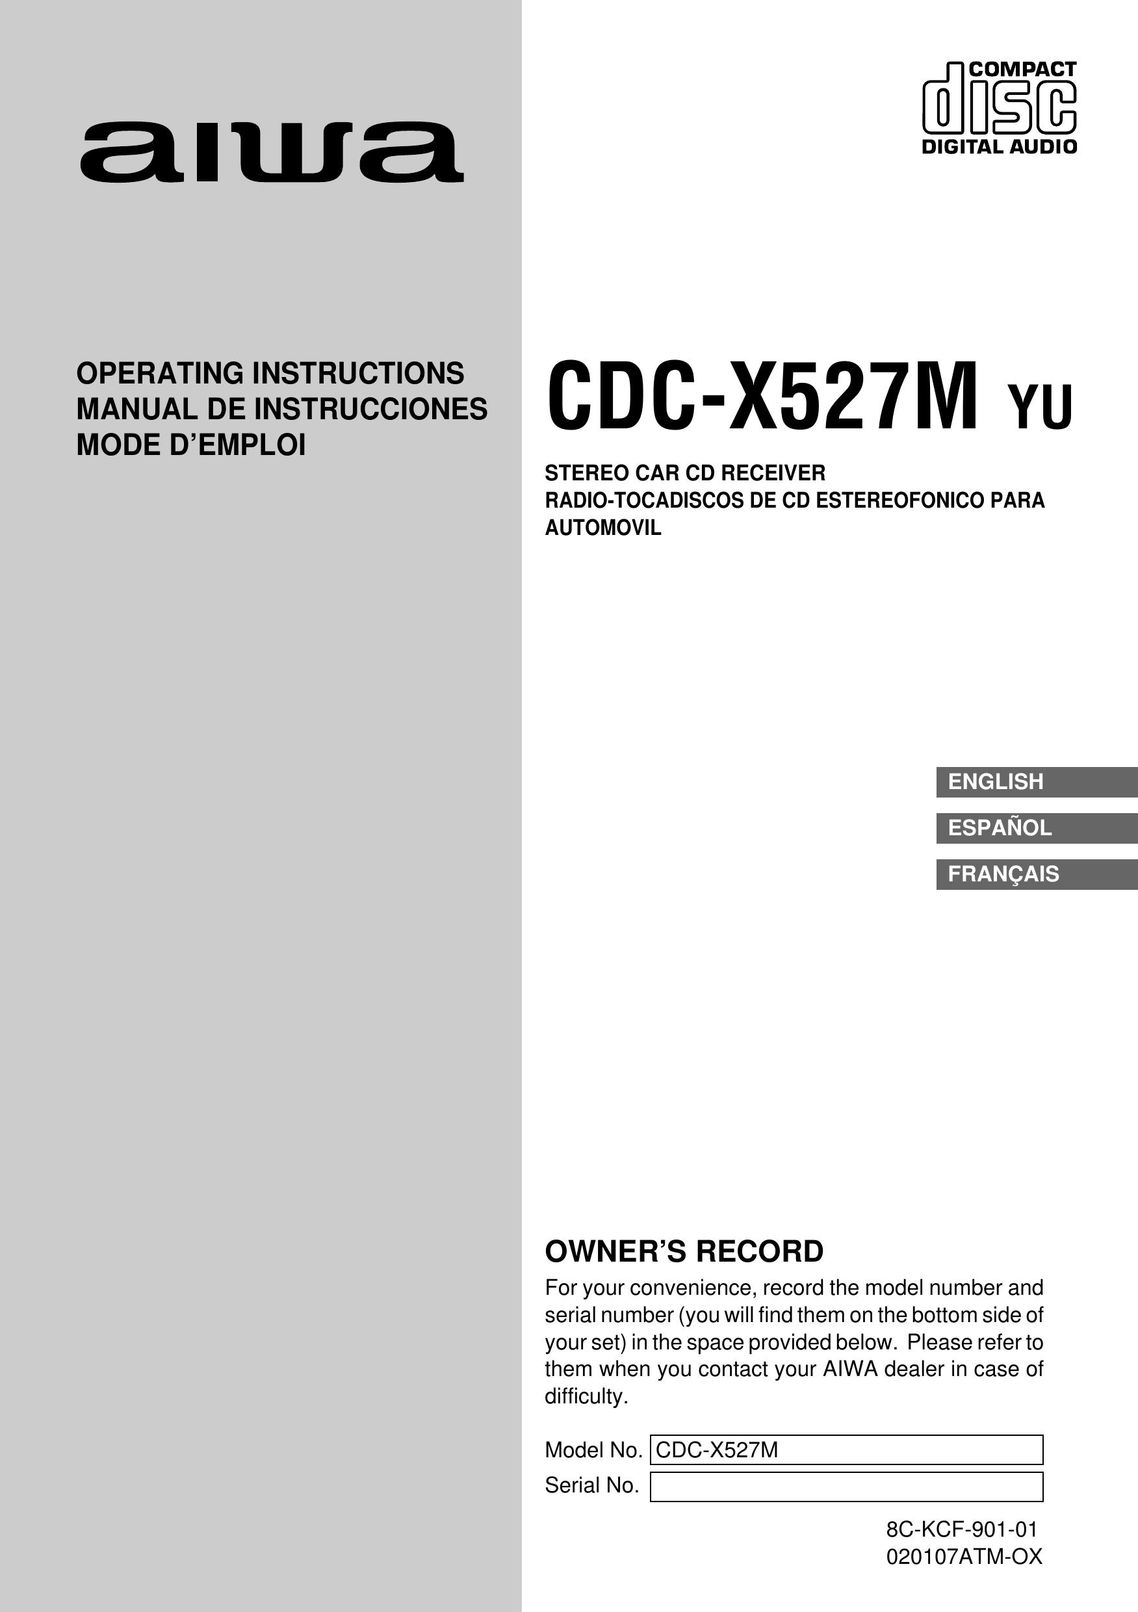 Aiwa CDC-X527M Car Stereo System User Manual